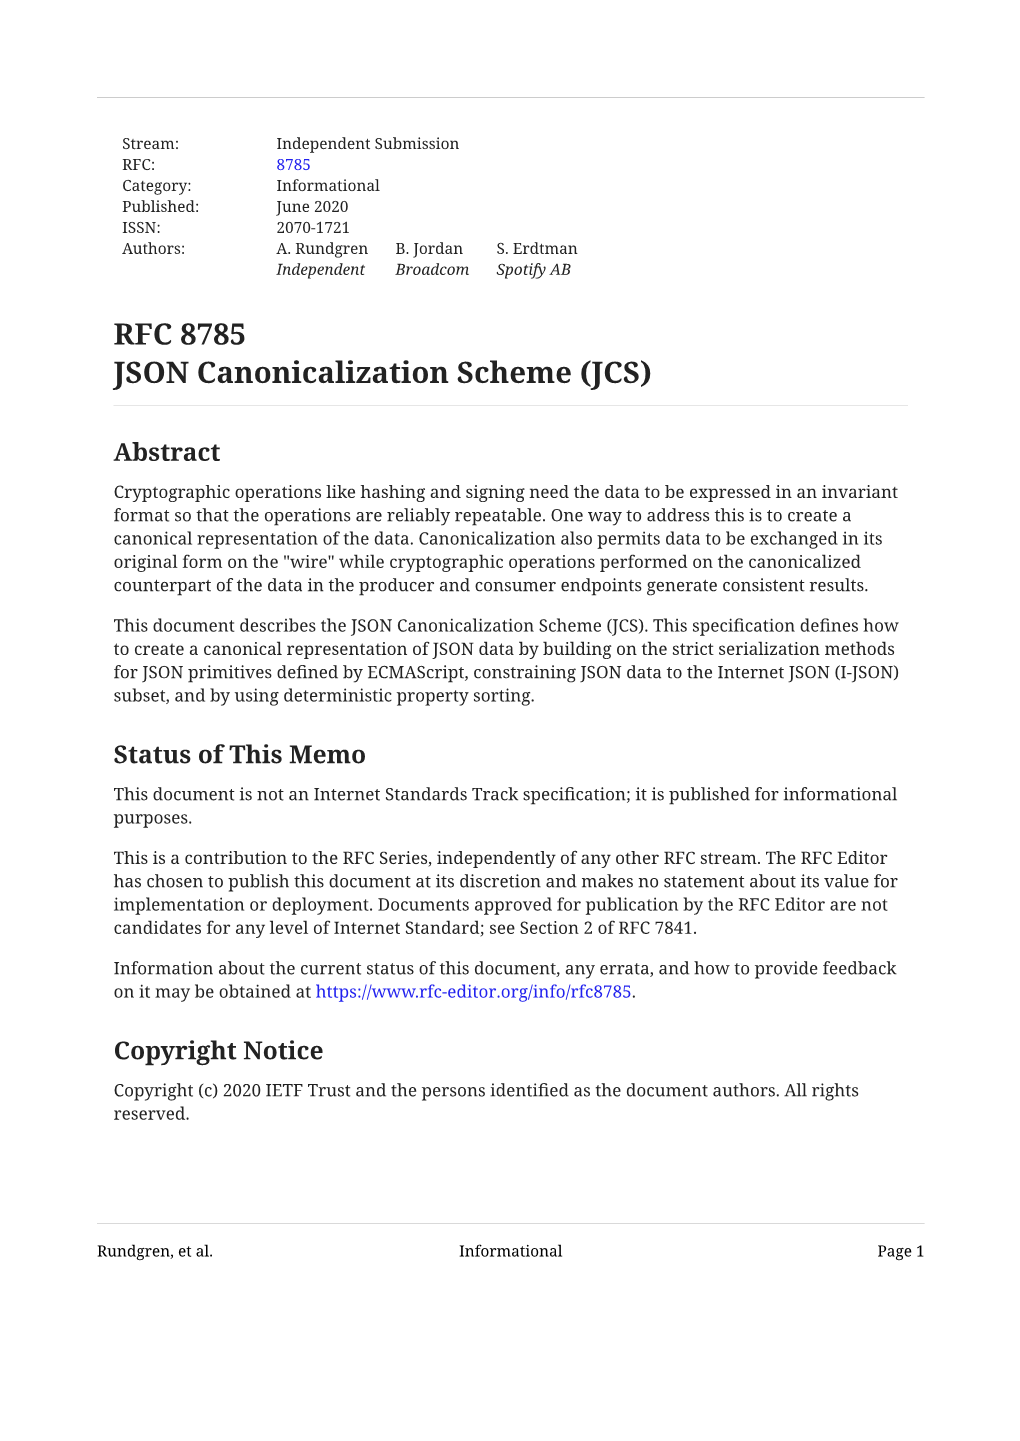 RFC 8785: JSON Canonicalization Scheme (JCS)